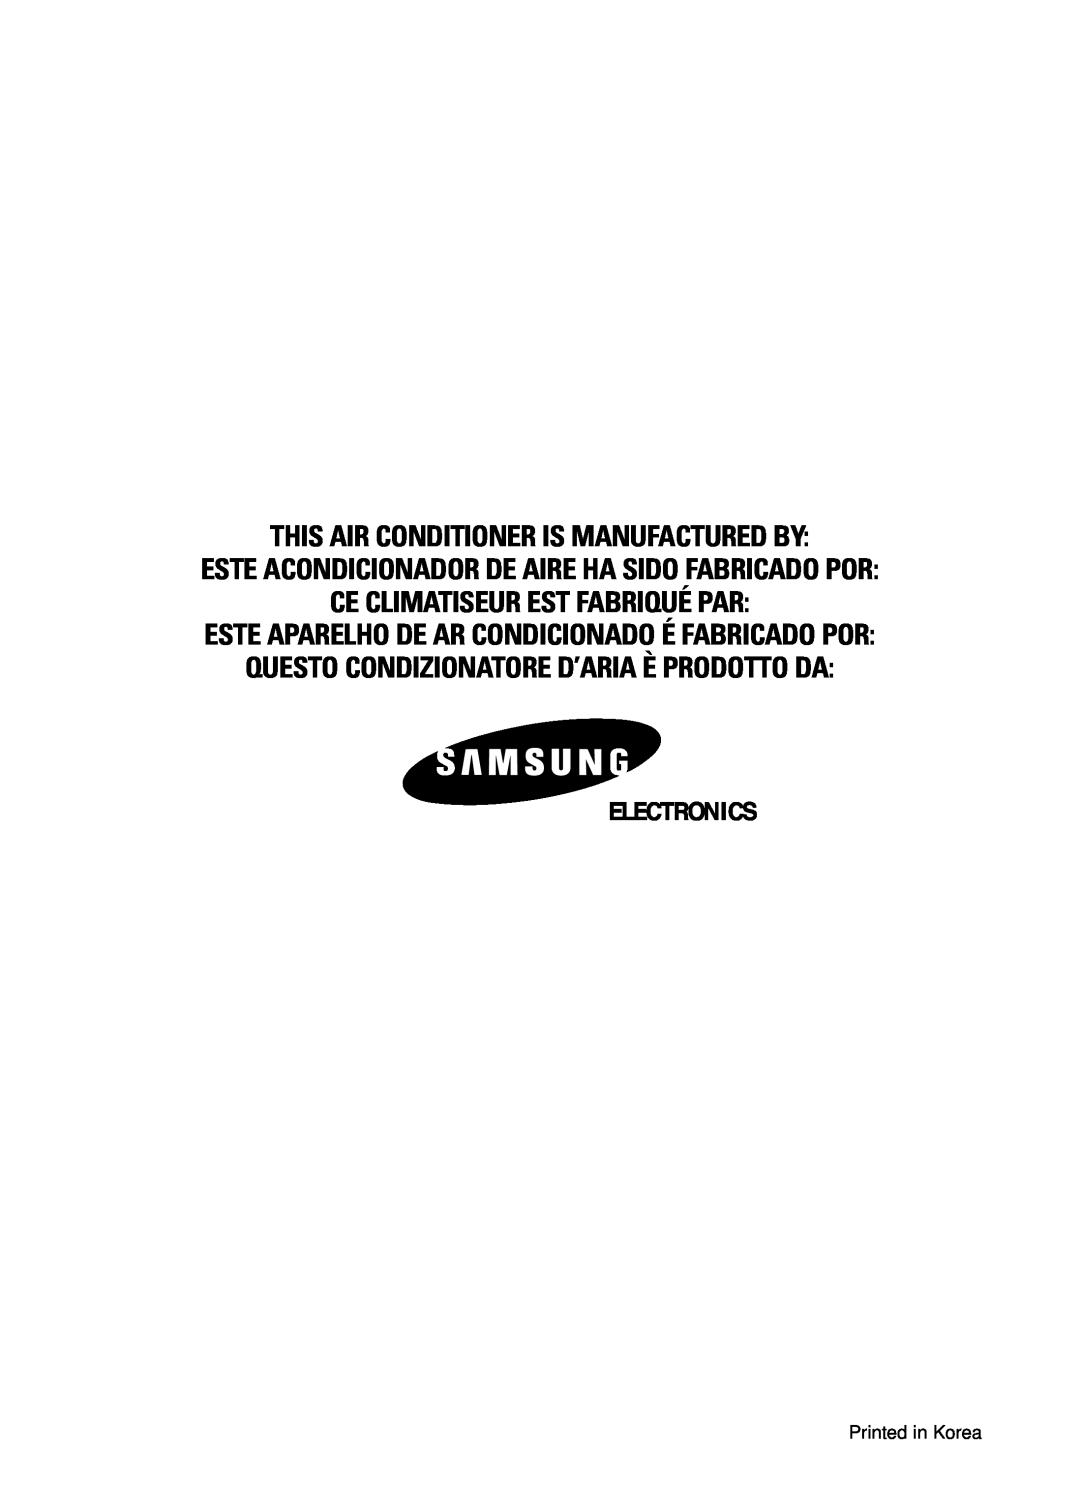 Samsung AW09A8SB This Air Conditioner Is Manufactured By, Este Acondicionador De Aire Ha Sido Fabricado Por 